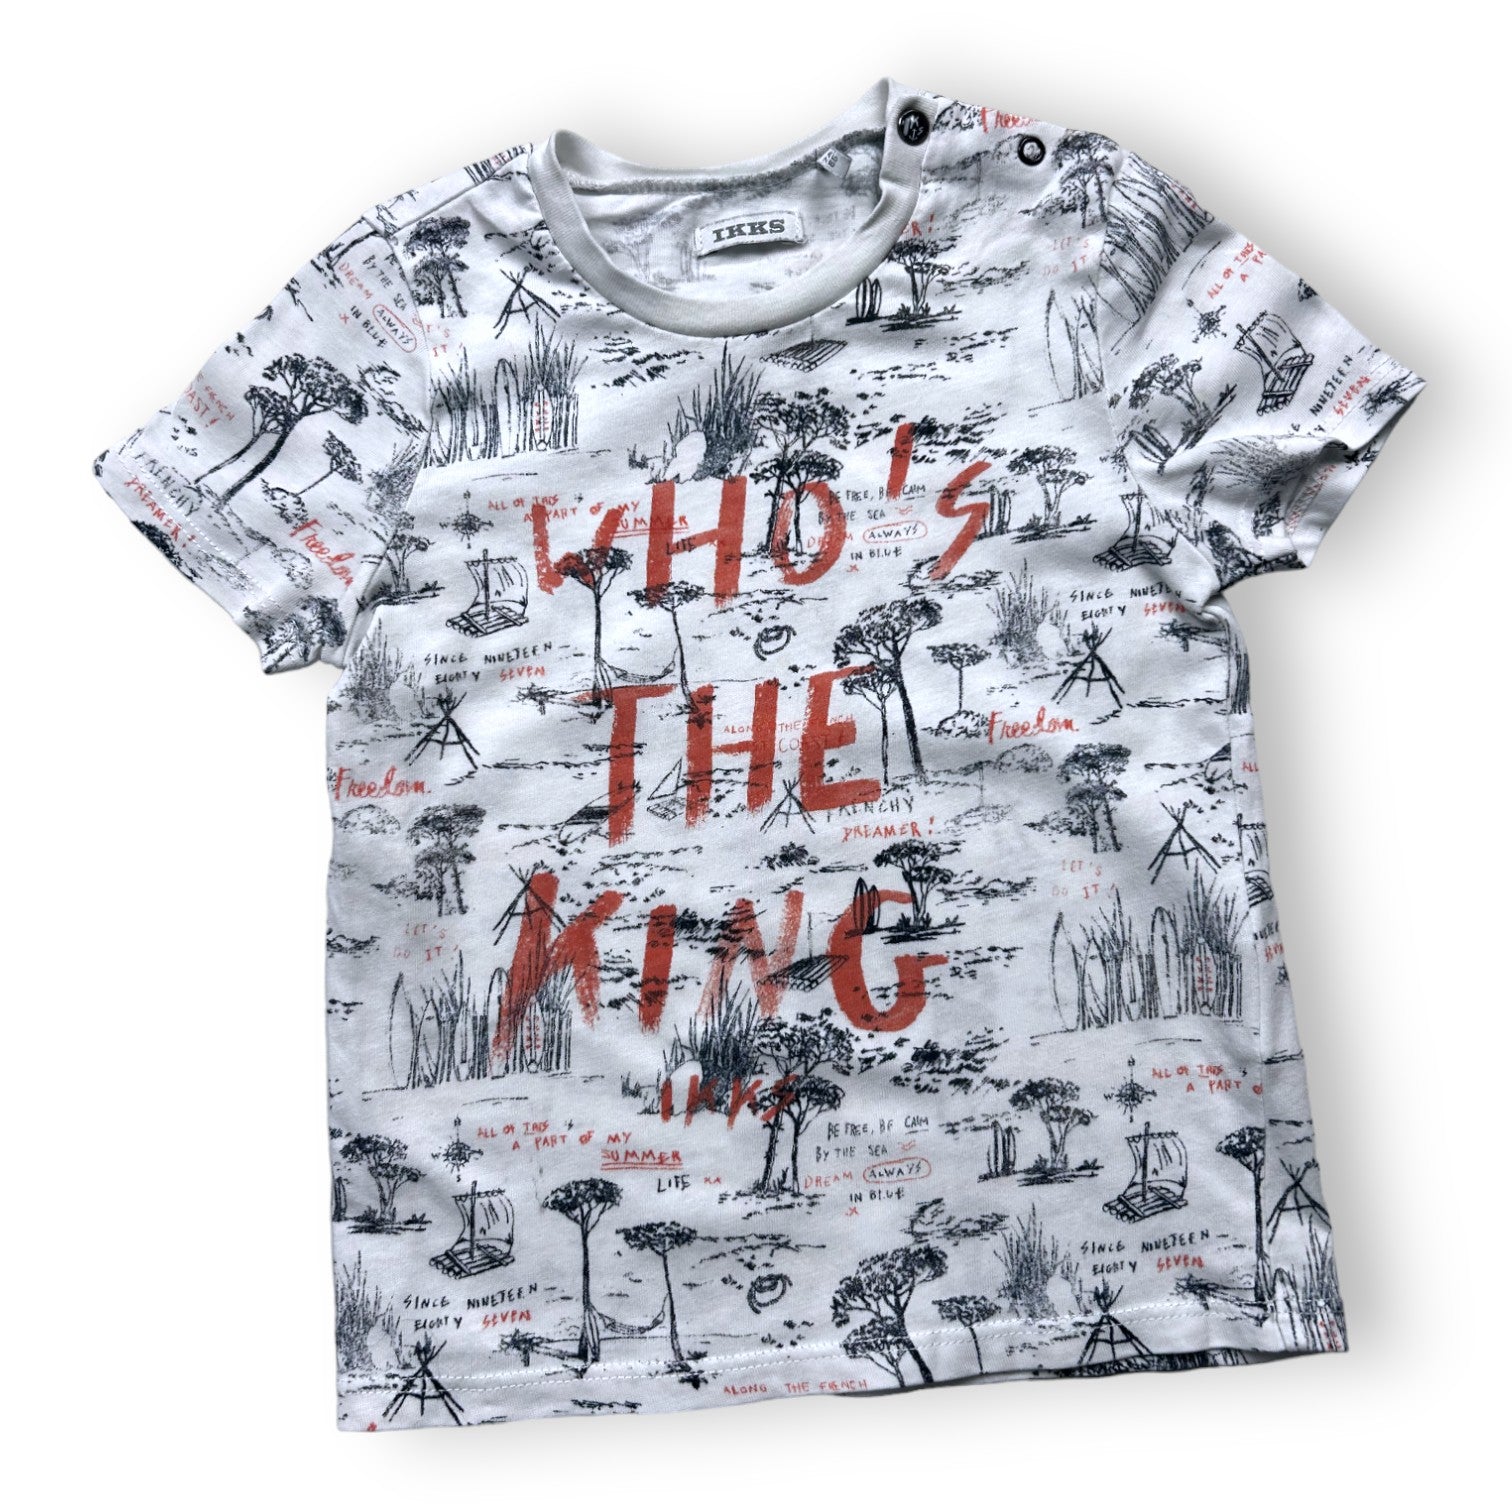 IKKS - t-shirt blanc imprimé "WHO'S THE KING" - 2 ans